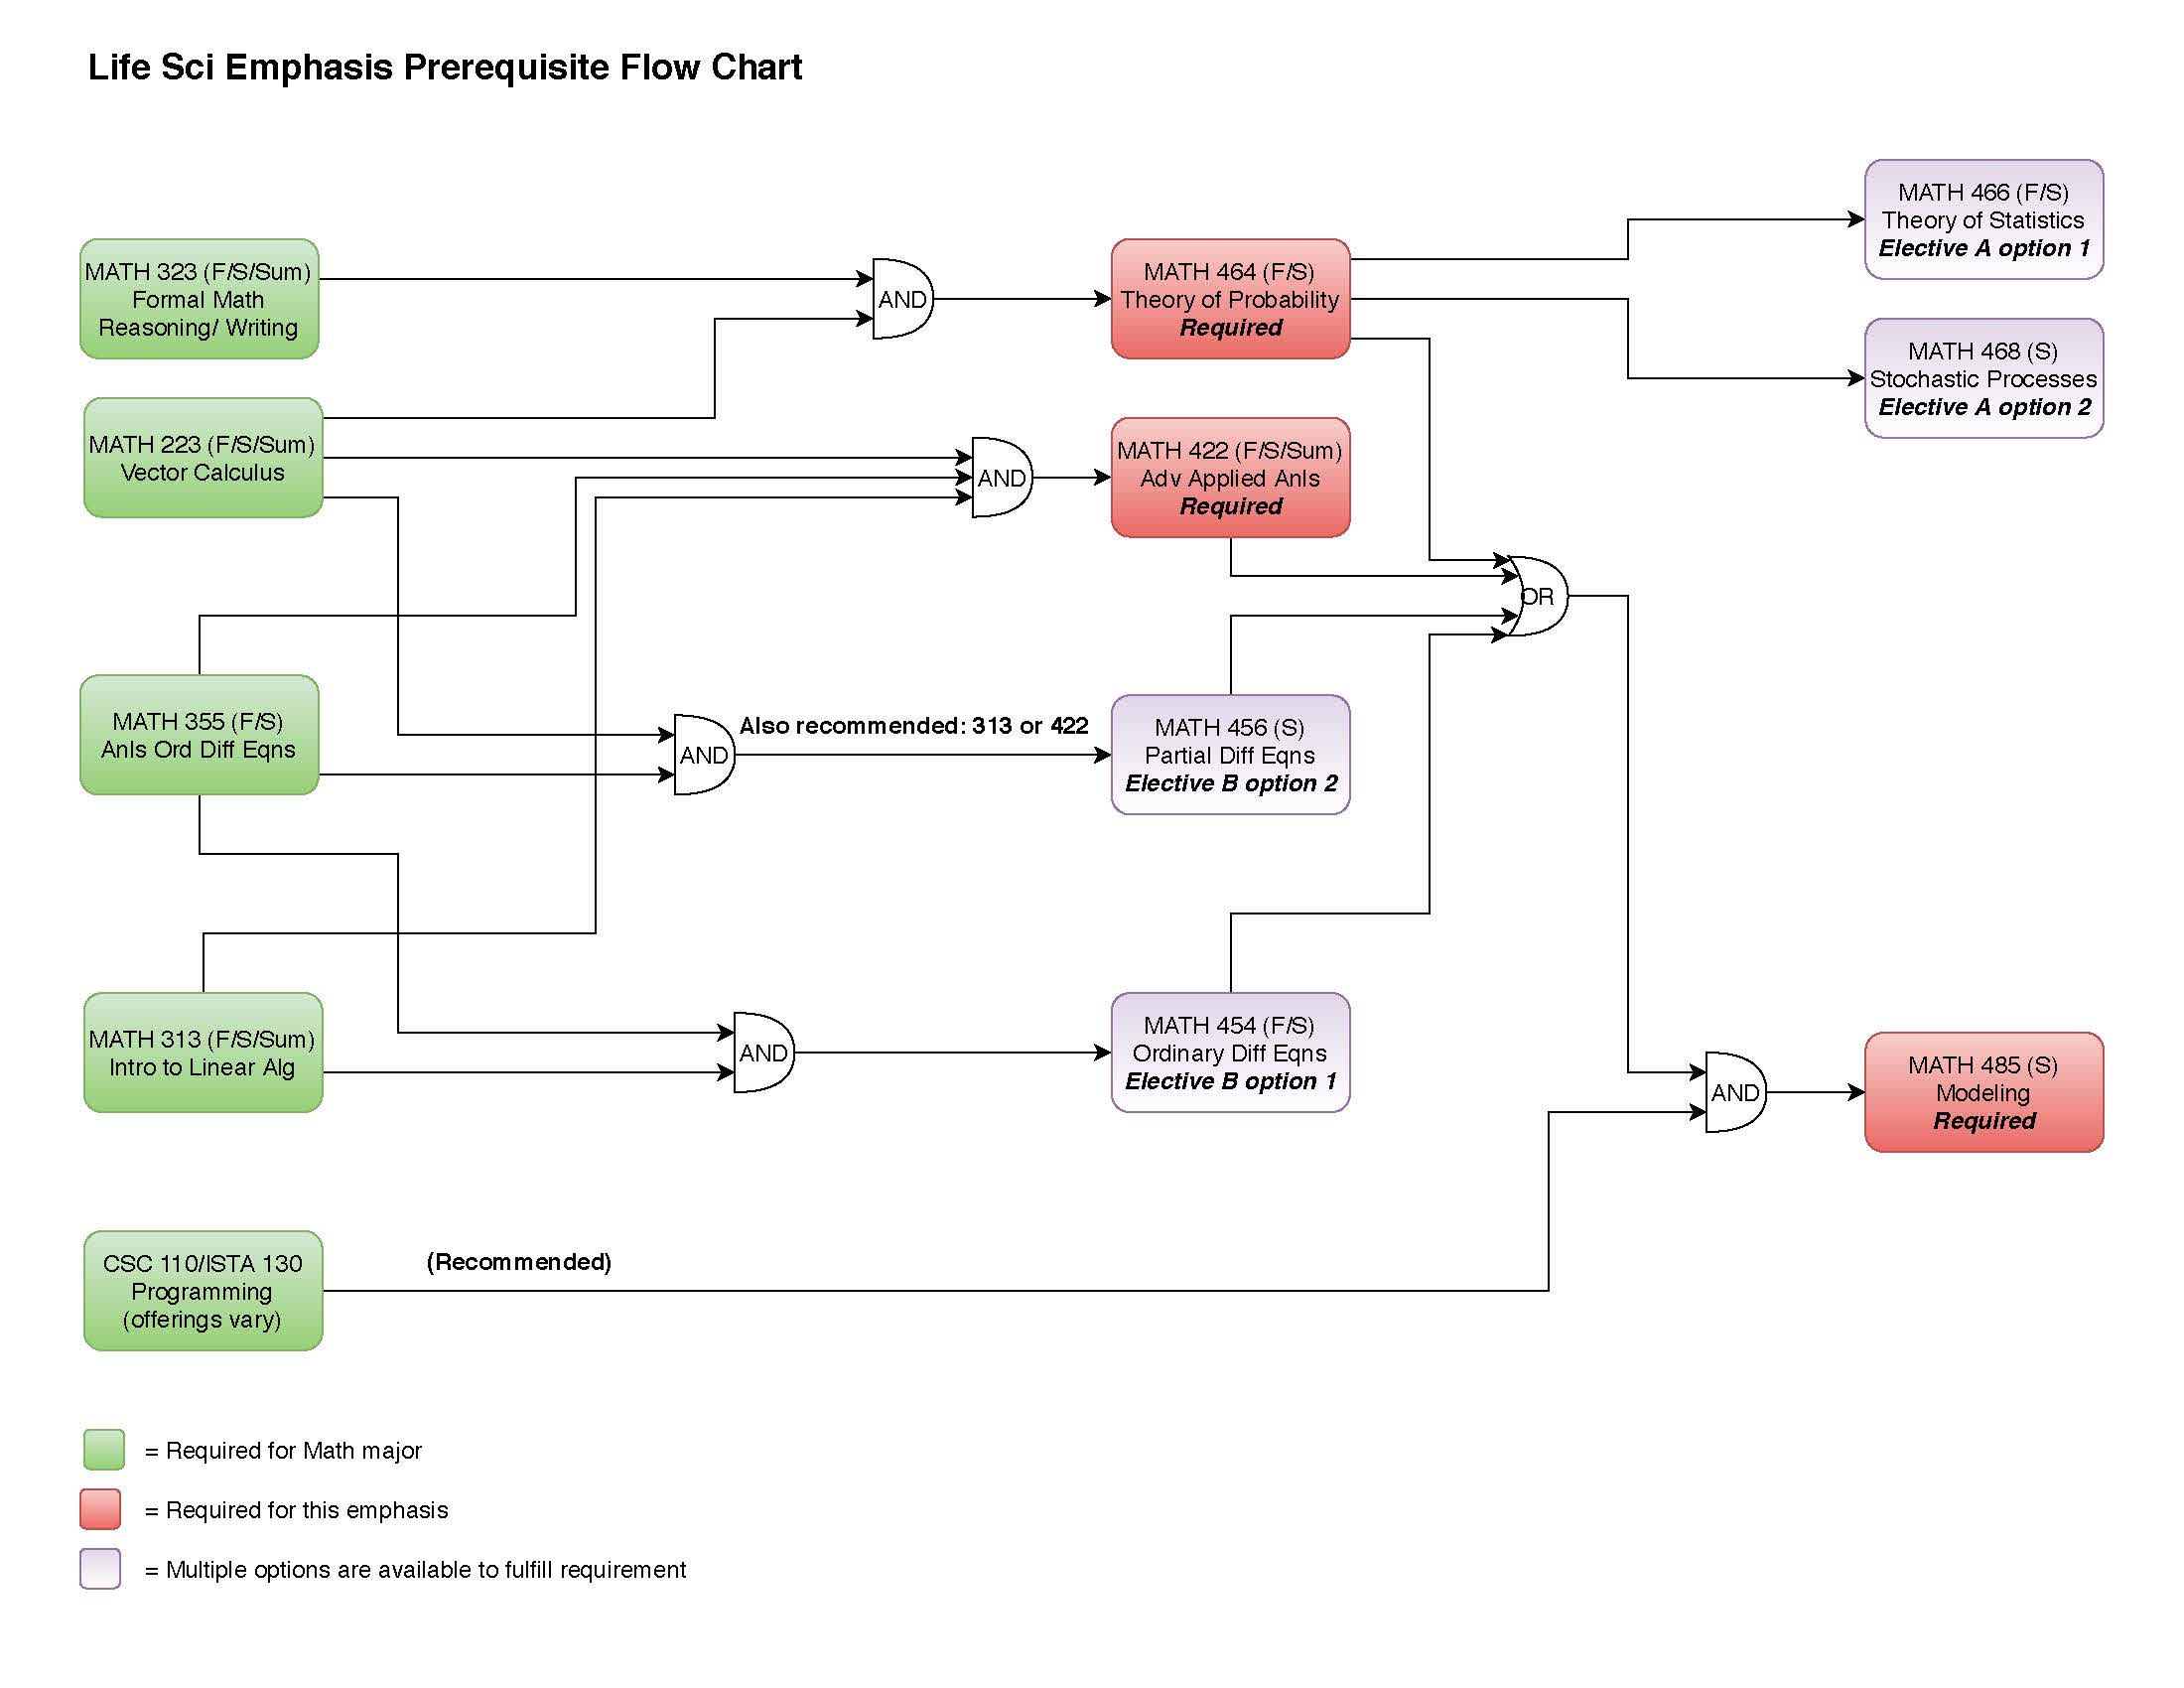 prerequisite flowchart for life sciences emphasis (click image for downloadable PDF)